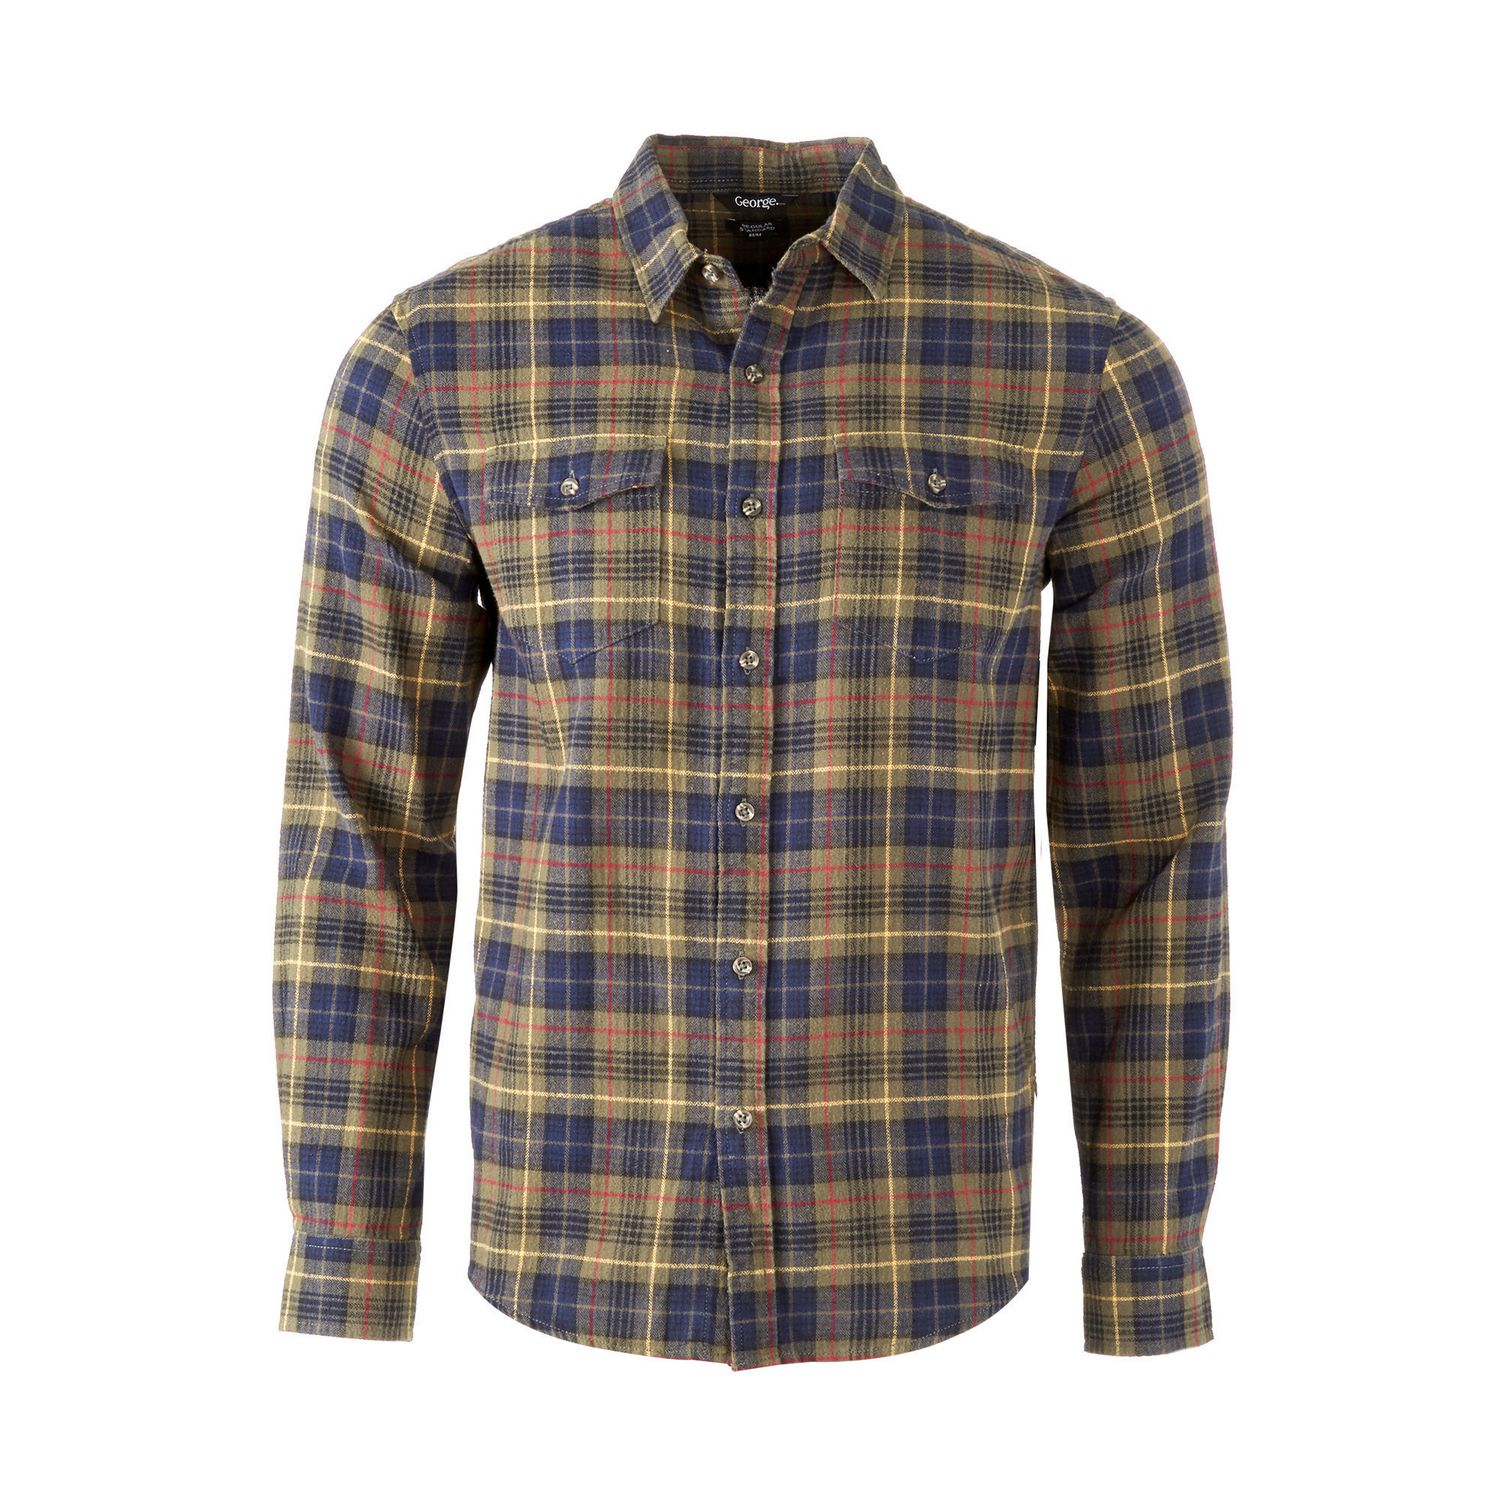 George Men's Flannel Shirt | Walmart Canada